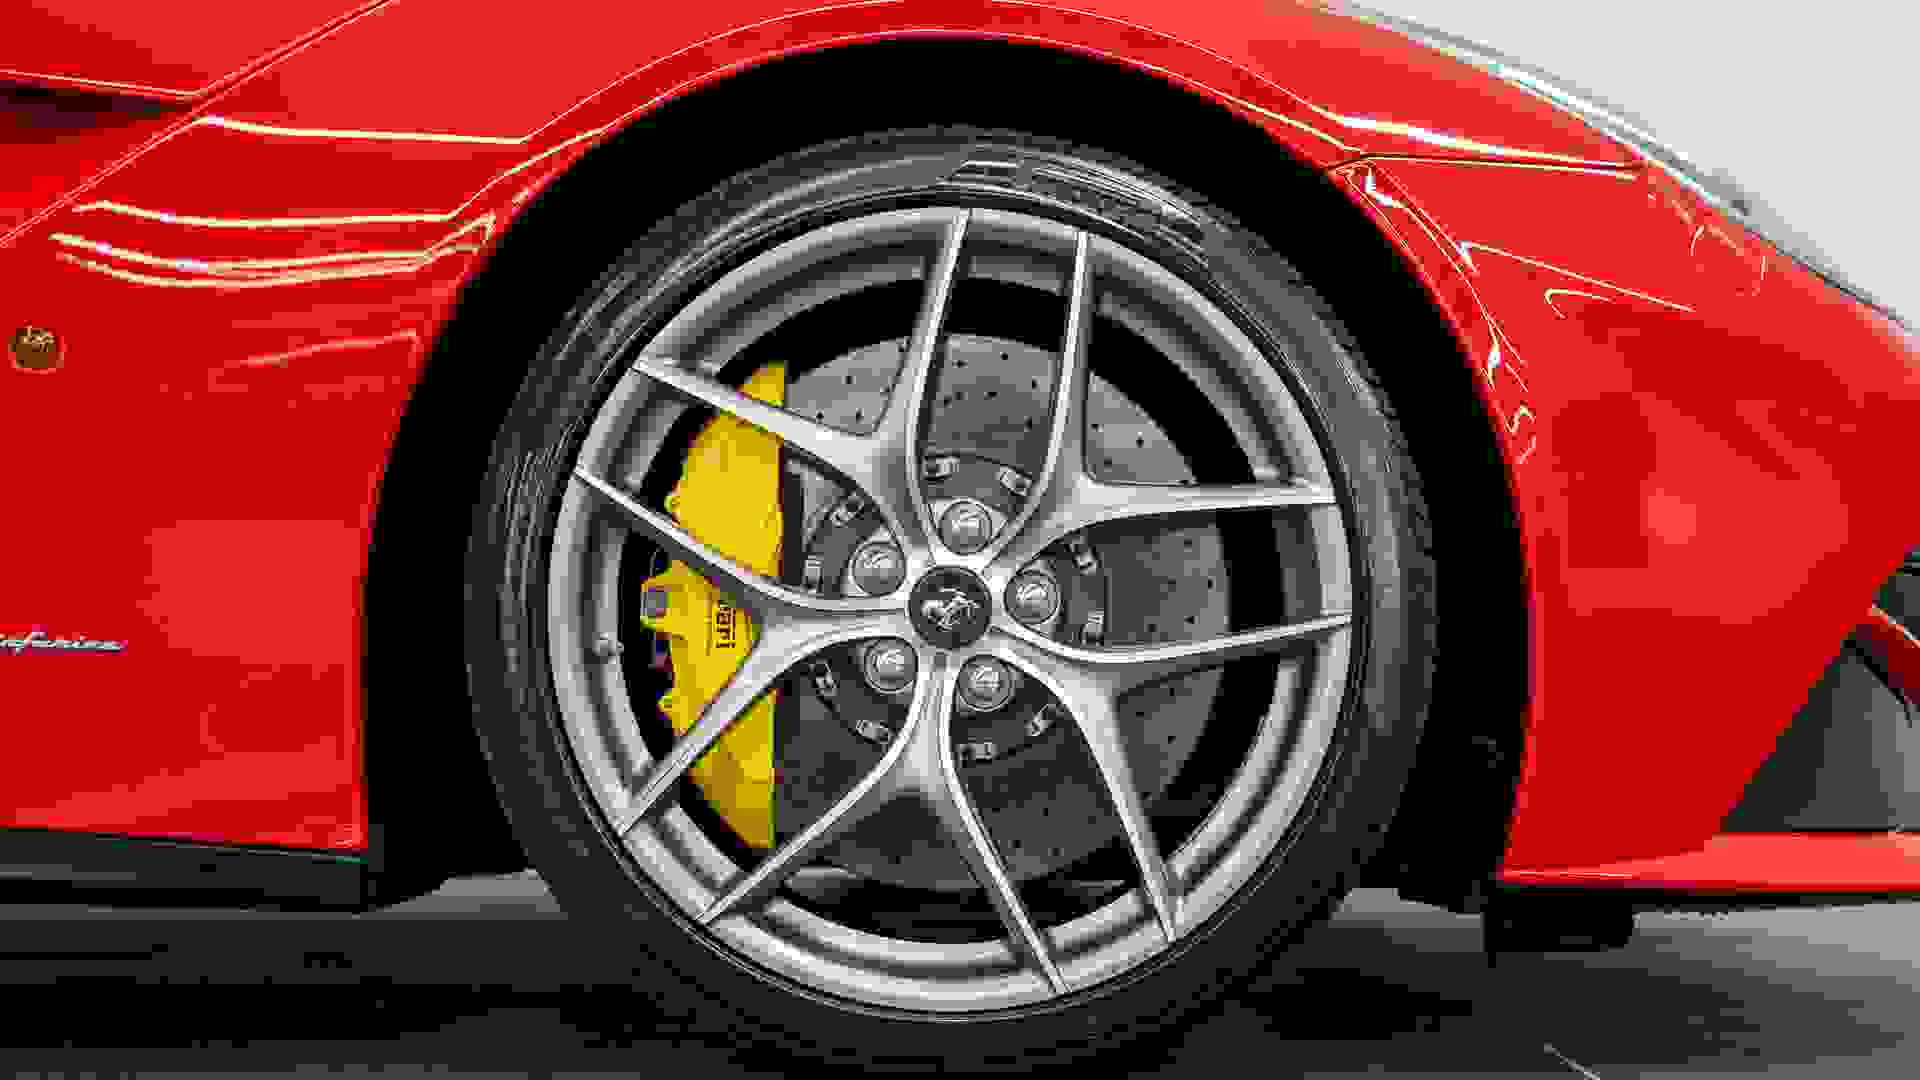 Ferrari F12 Photo fe30633f-1232-4b57-bd18-1036ad6bdfec.jpg